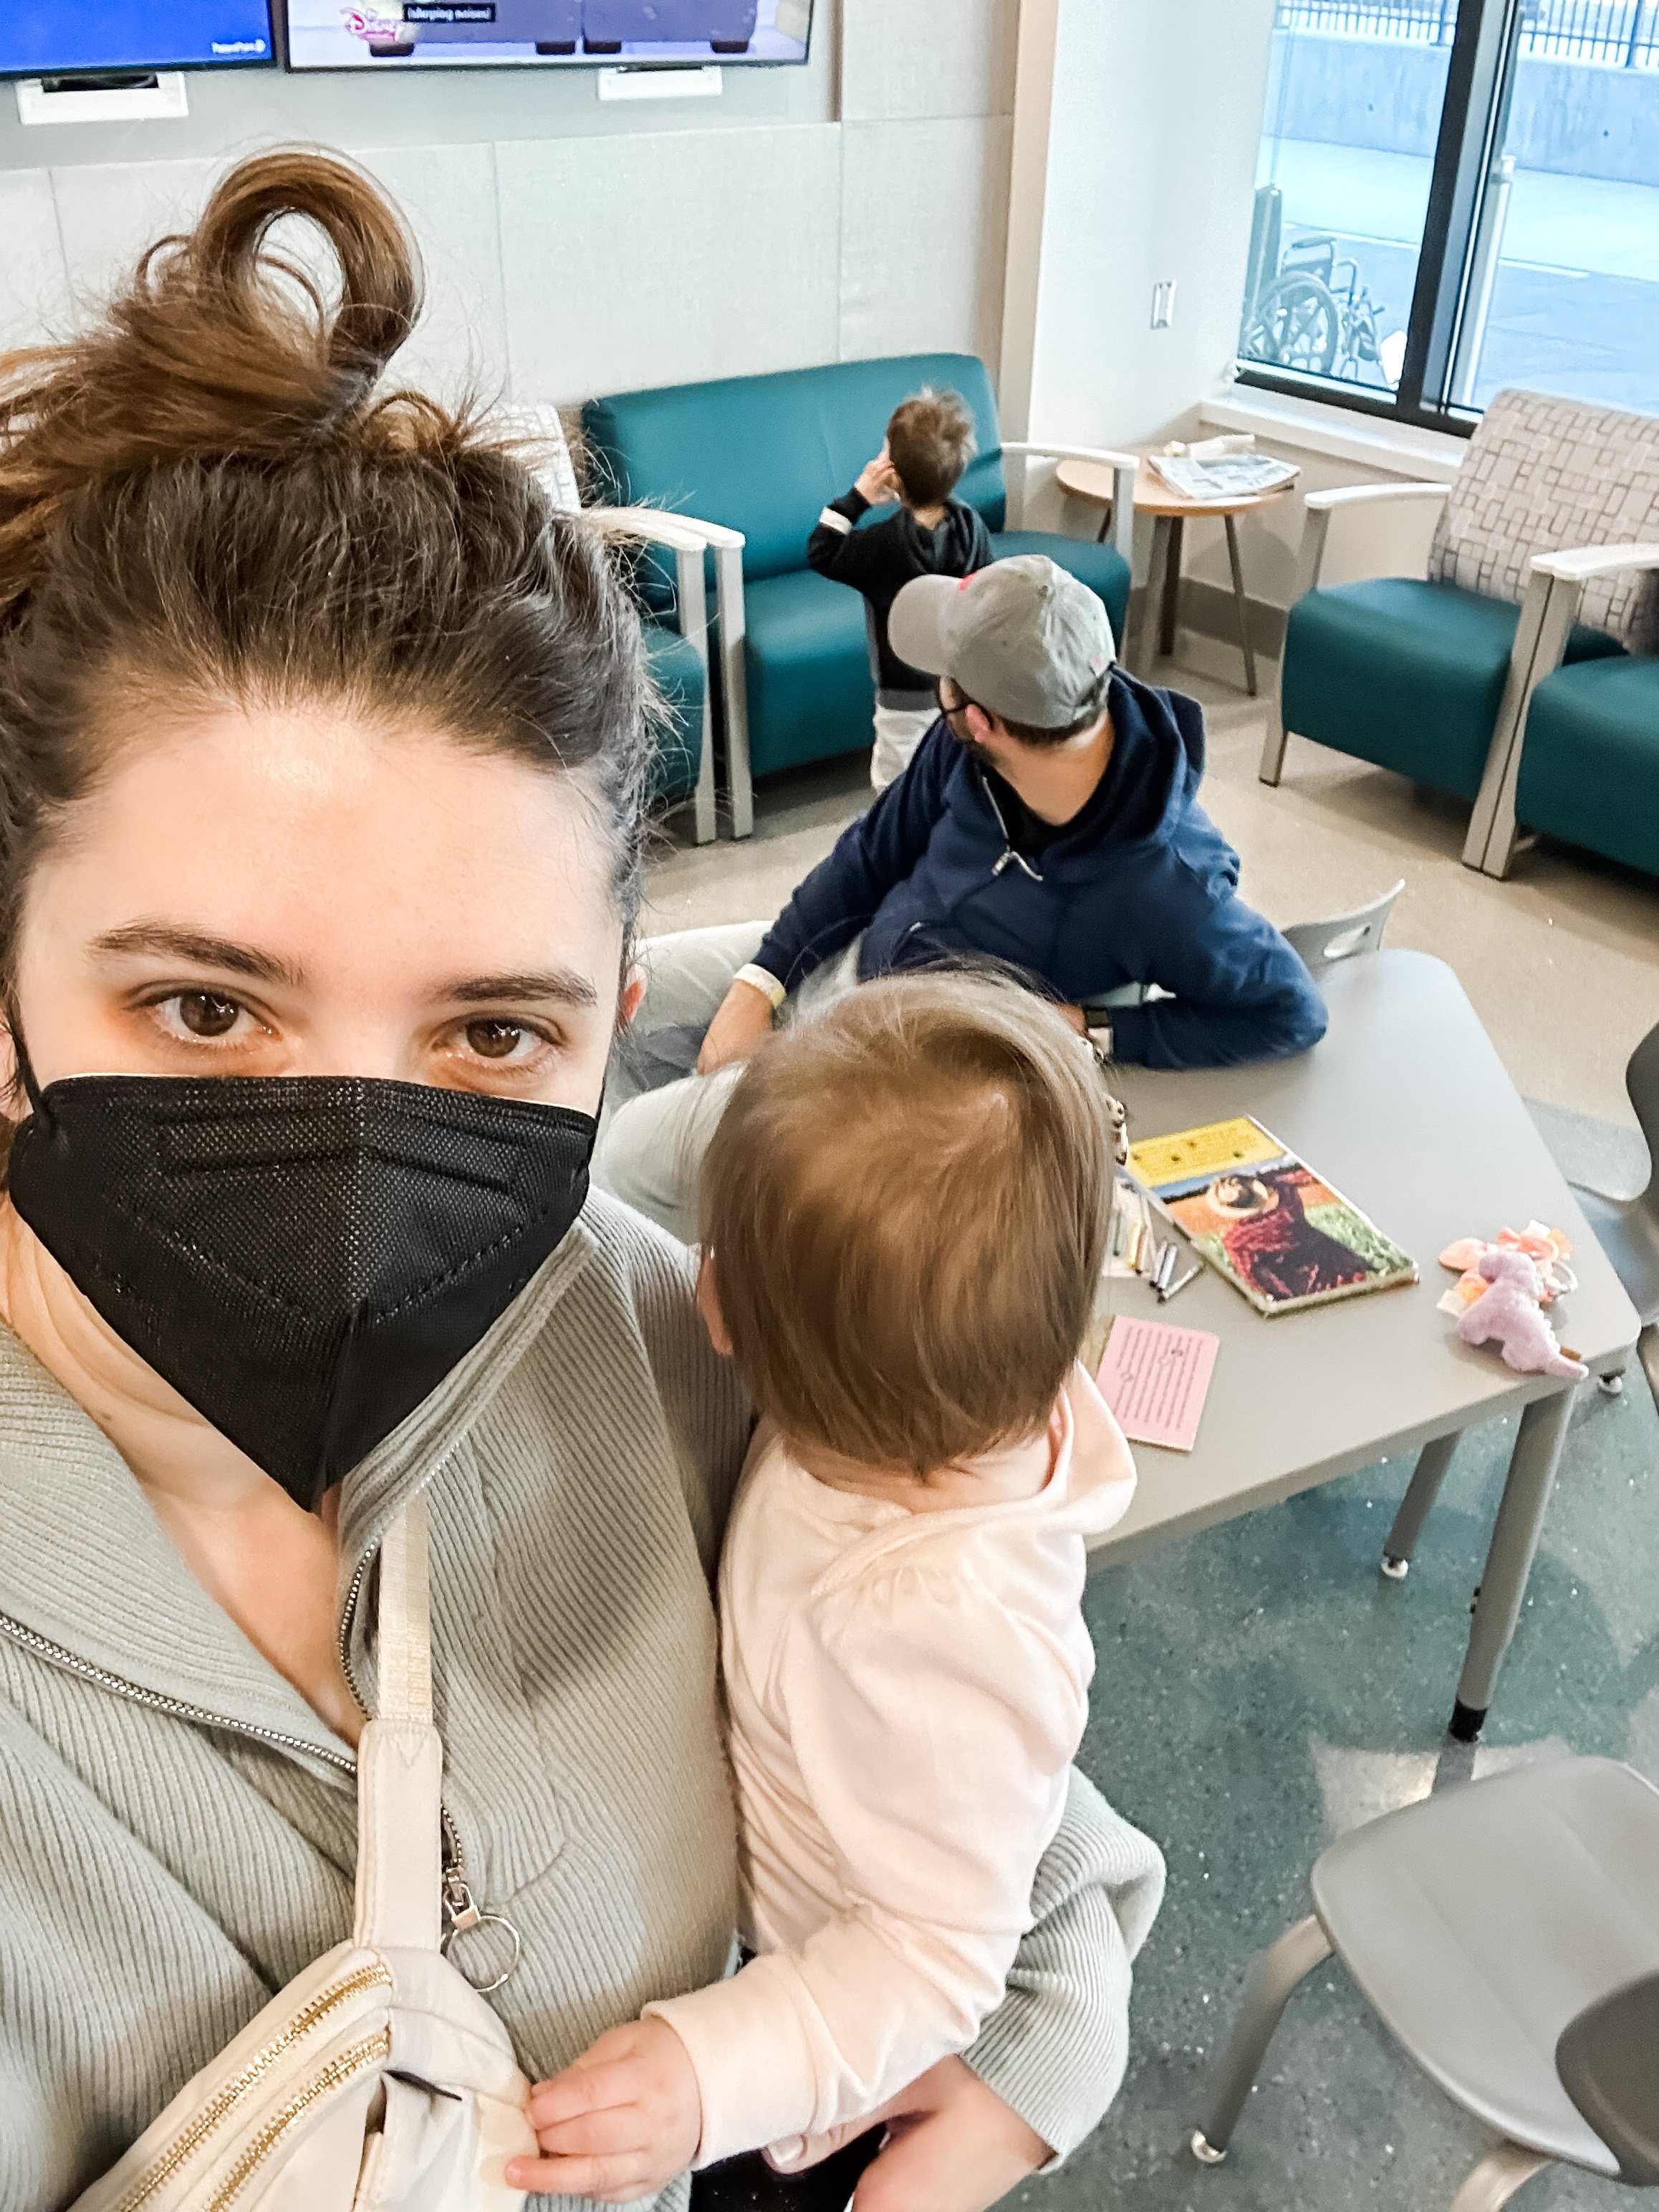  family in the ER waiting room 